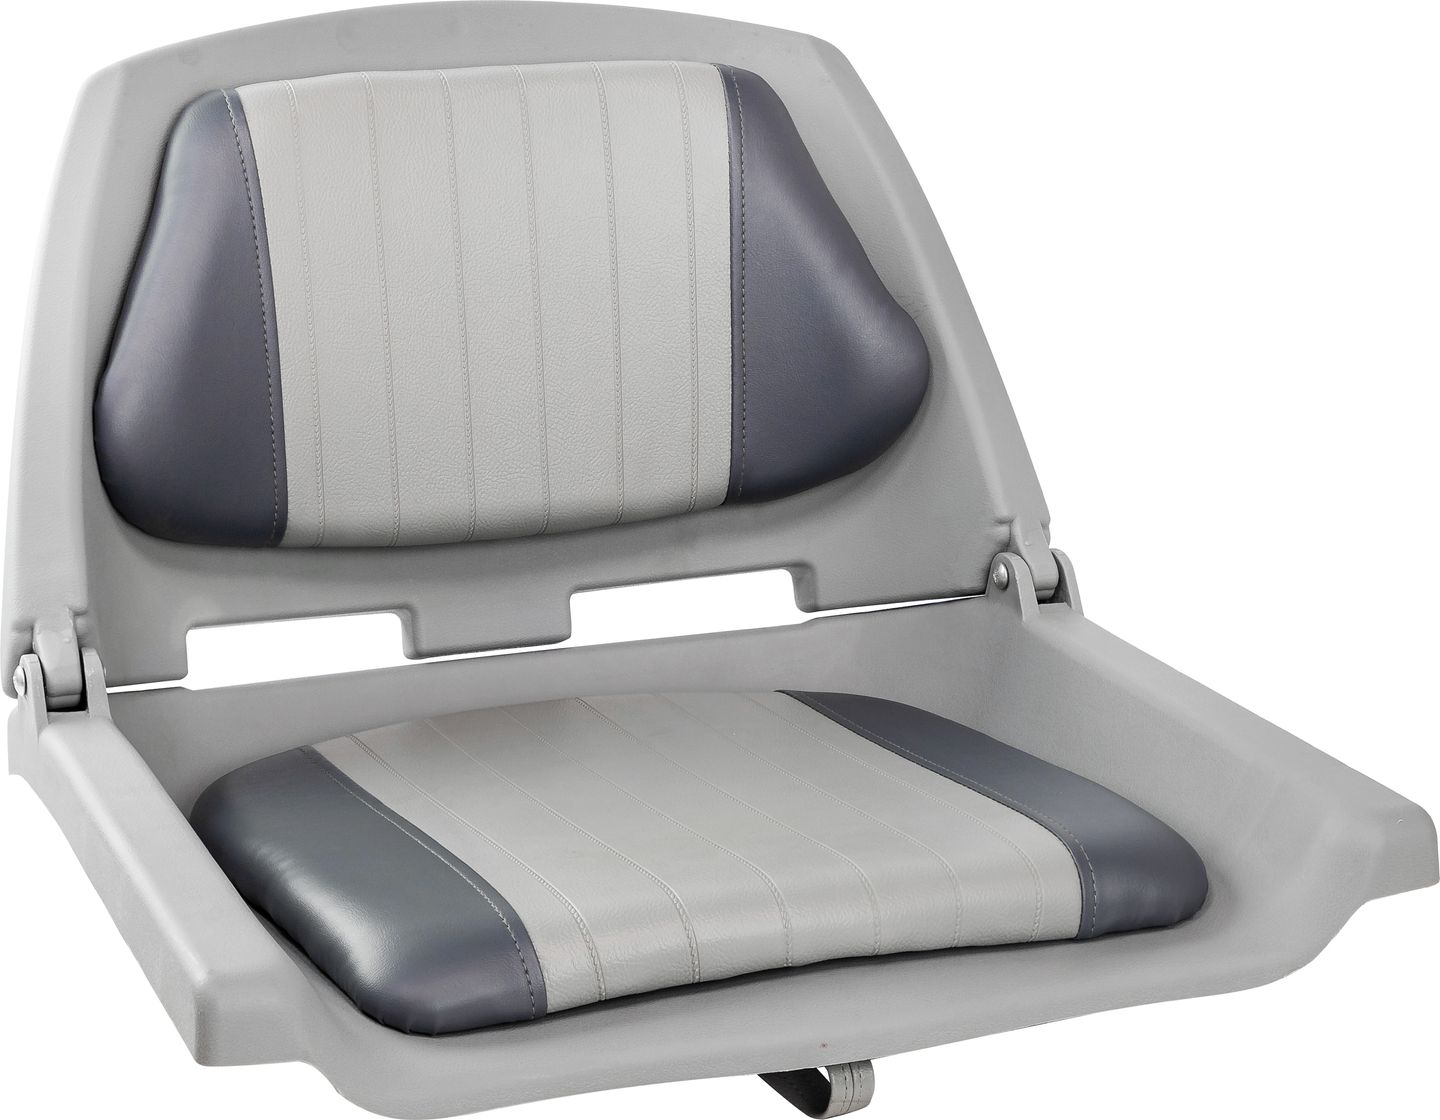 Кресло мягкое складное, серое/серое C12508G кресло складное мягкое traveler белый серый 1061104c